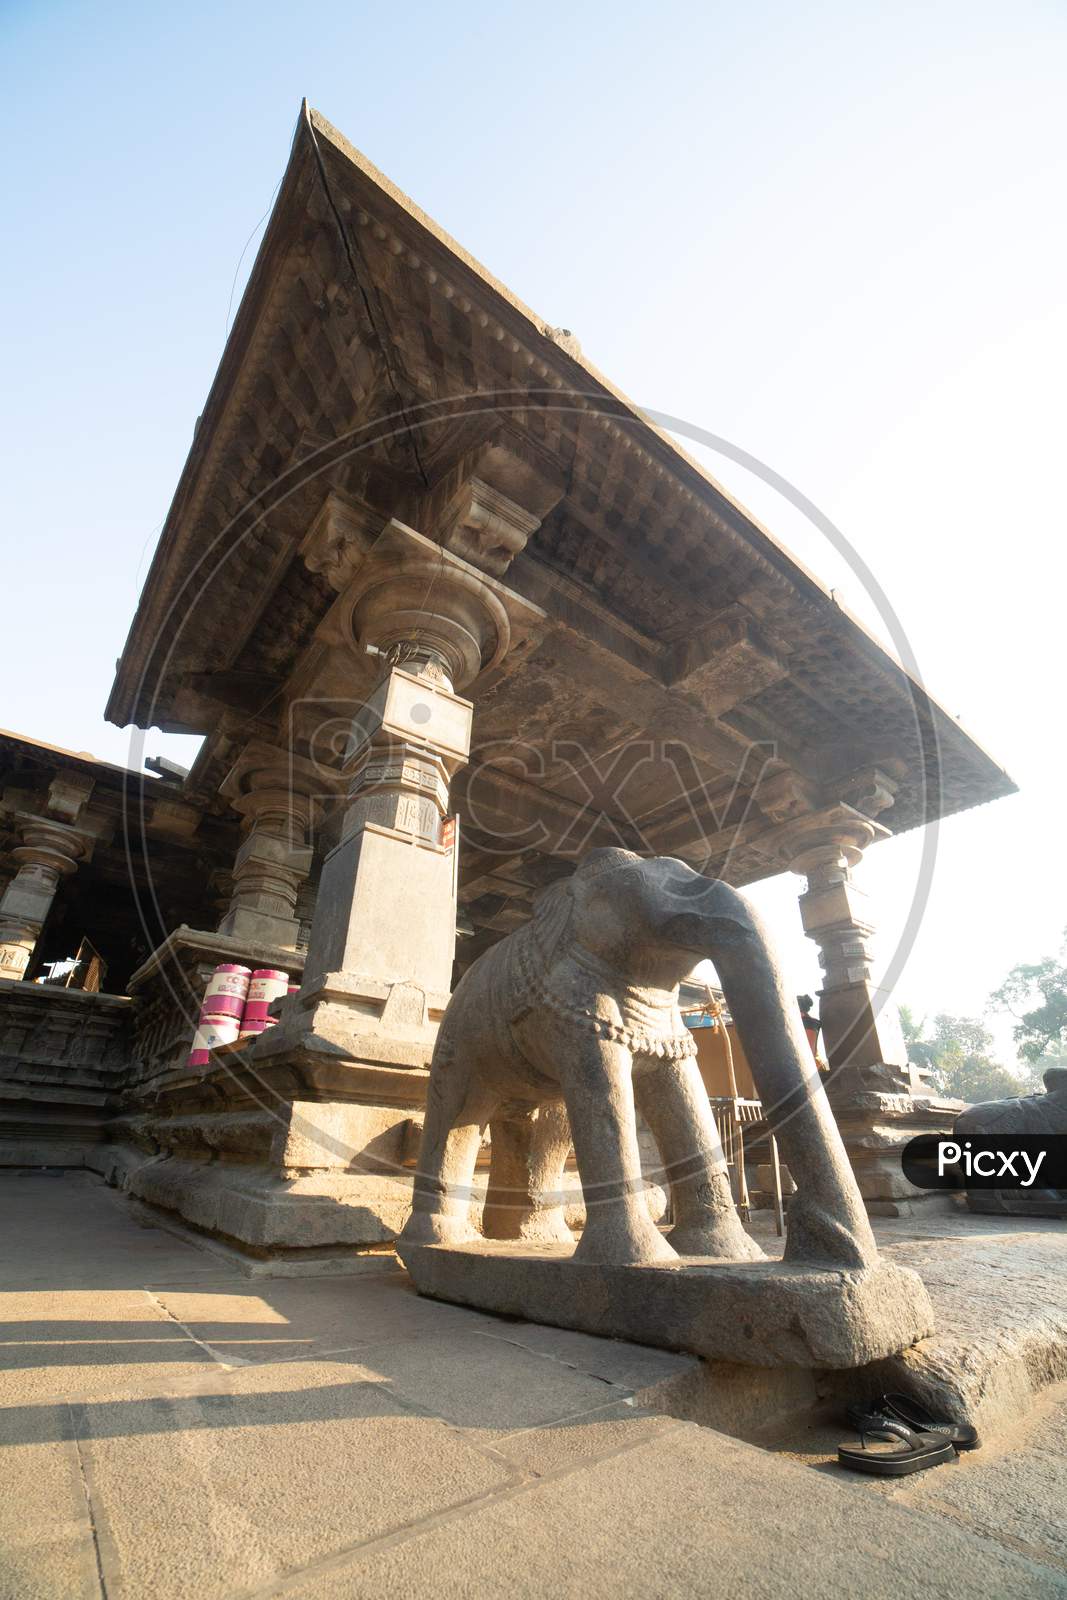 Elephant Statue in Thousand Pillar Temple, Warangal